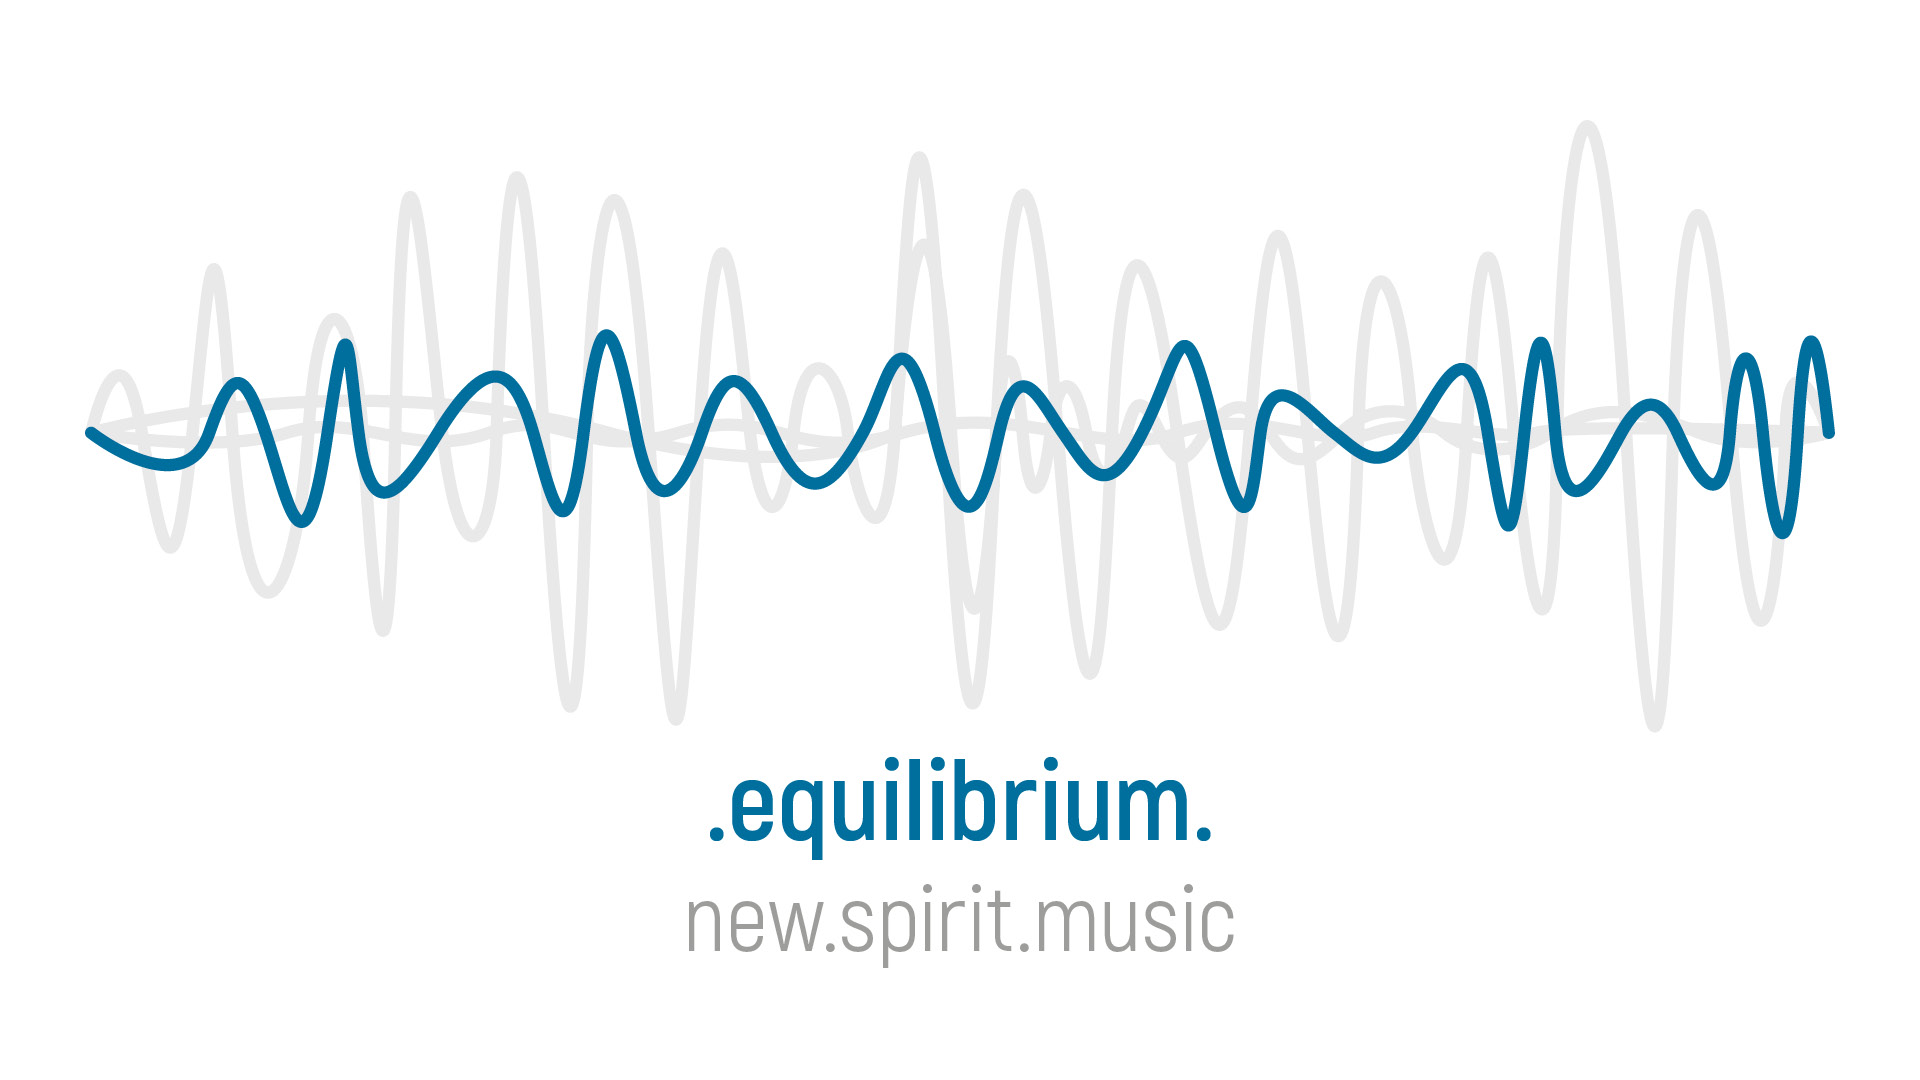 Equilibrium (NewSpirit&Music, 9 May 2021)